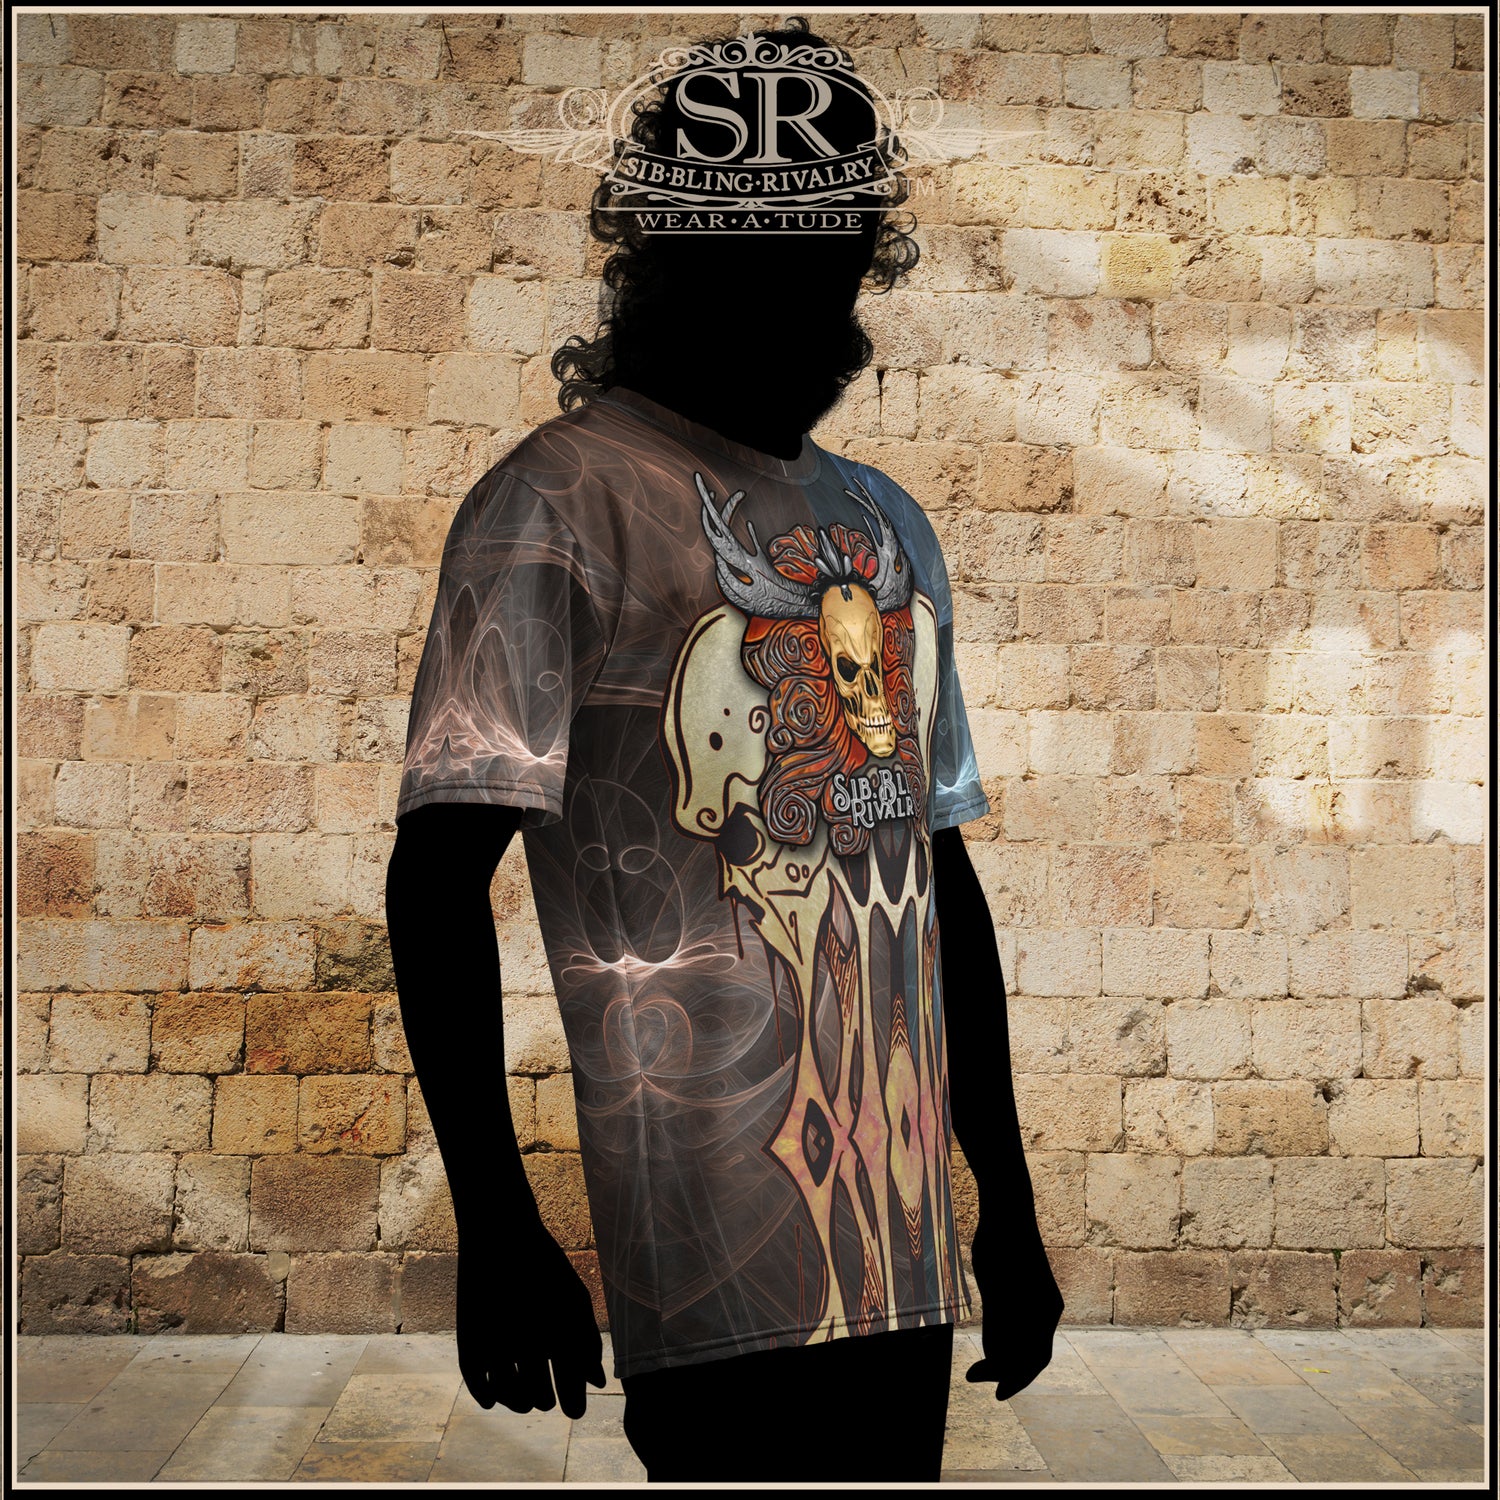 Dem Bones ~ Crew Neck T-shirt - SIB.BLING RIVALRY